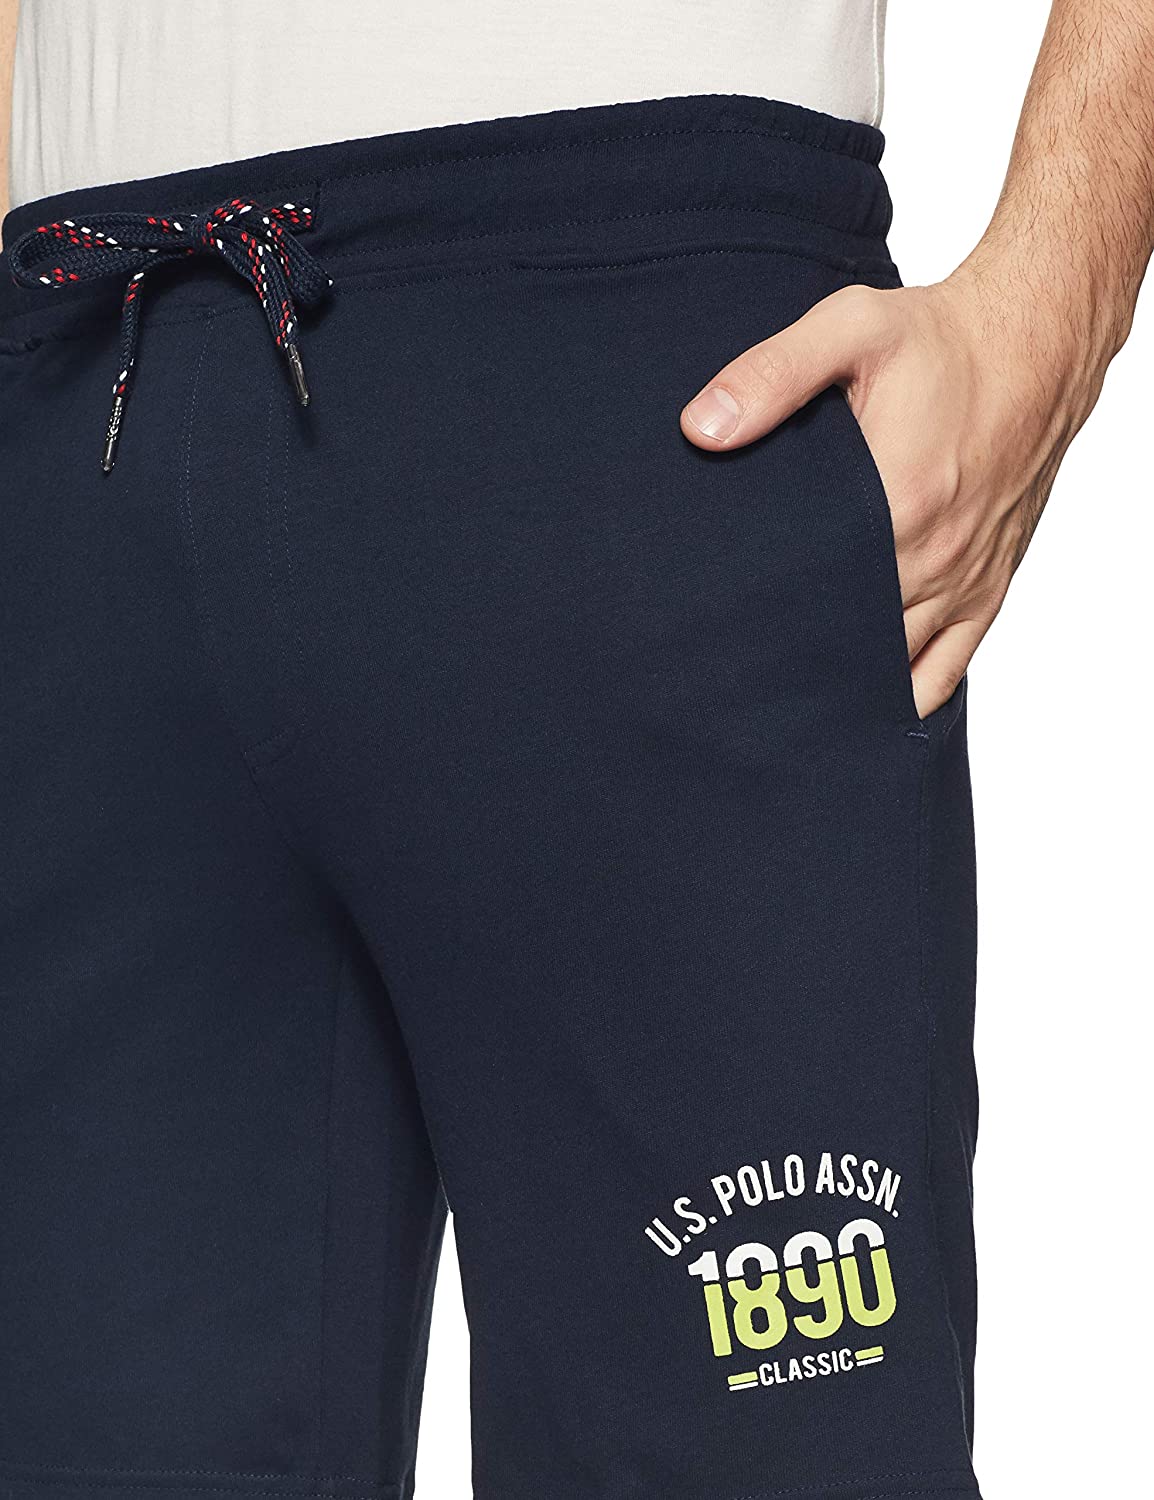 Bermuda Shorts in Cotton/Linen for Boys - dark blue, Boys